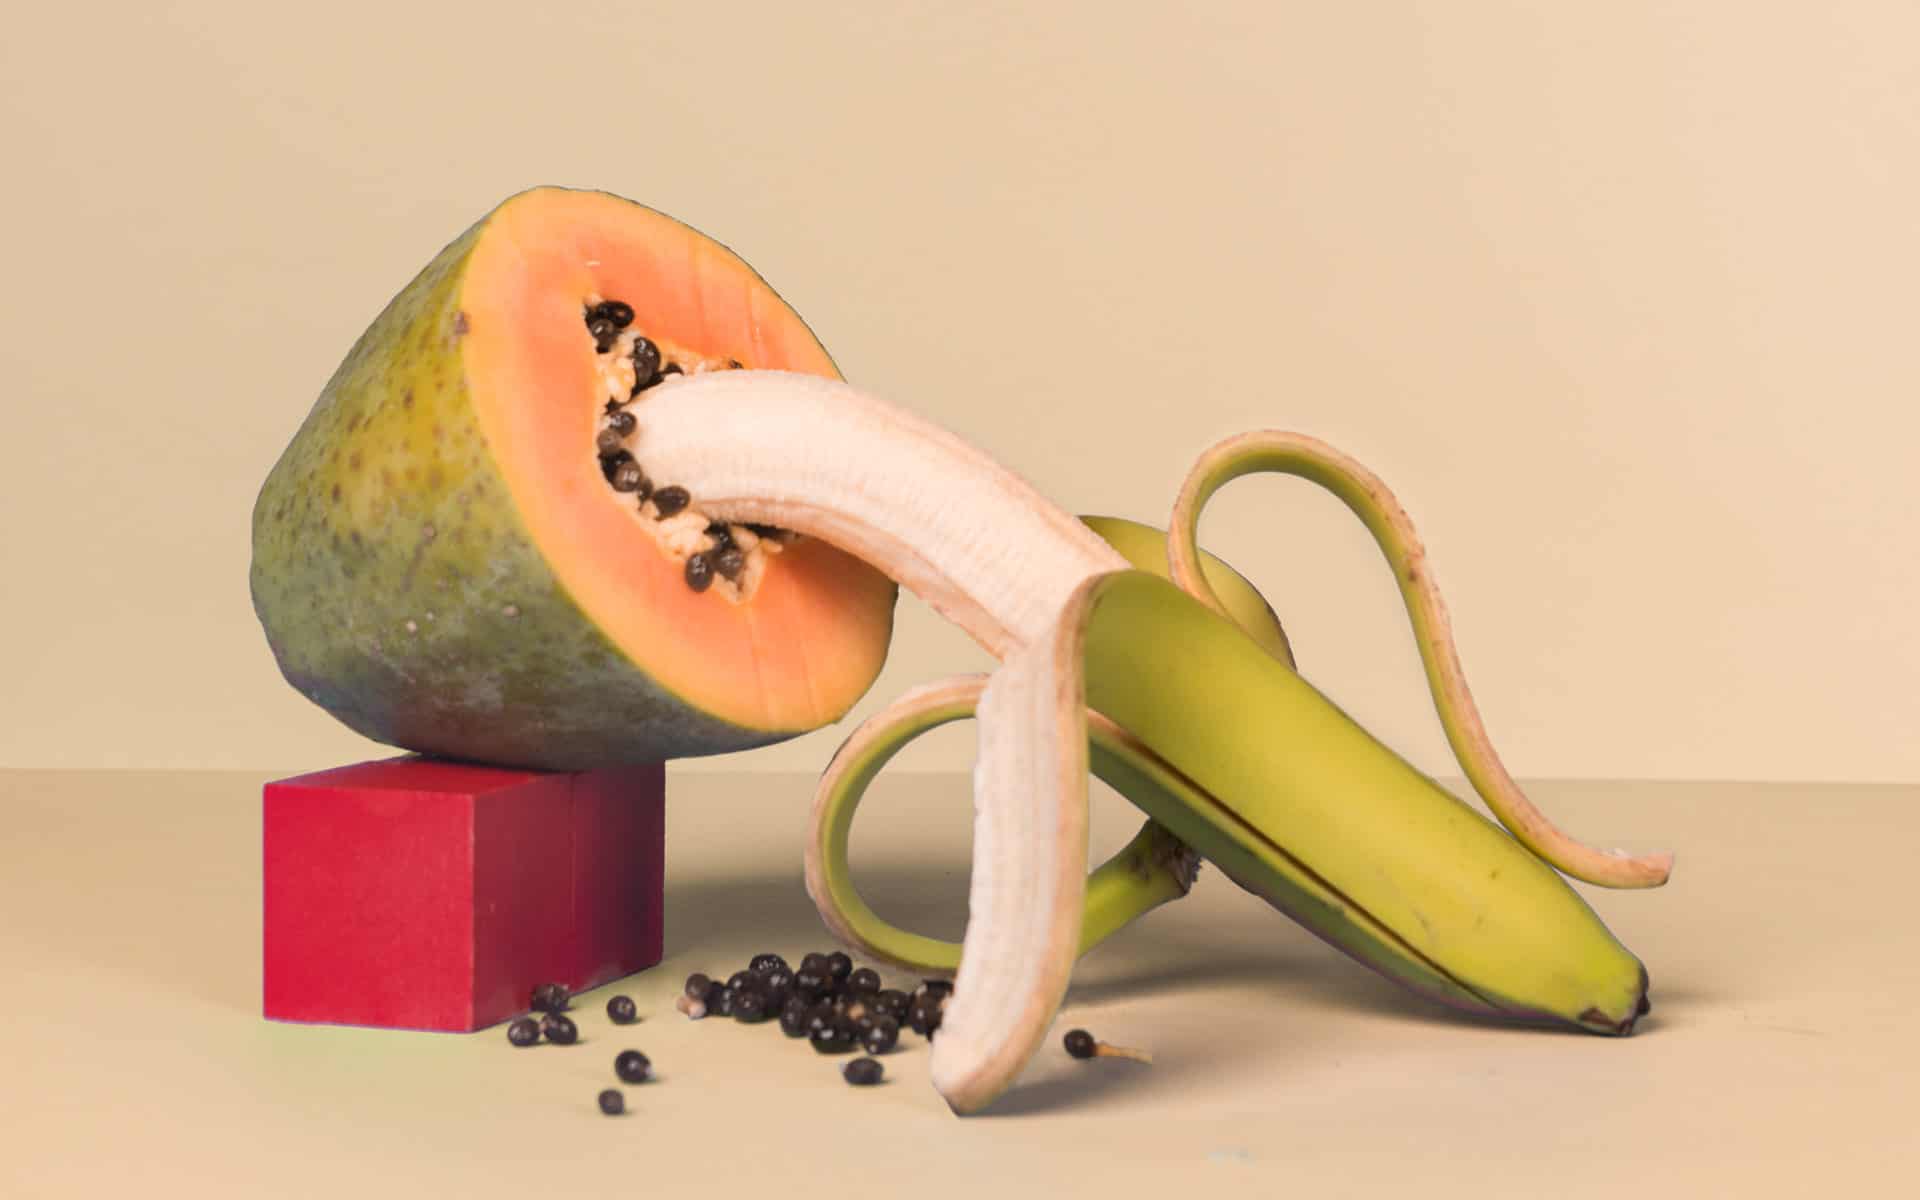 Banana entering a papaya, symbolising intercourse